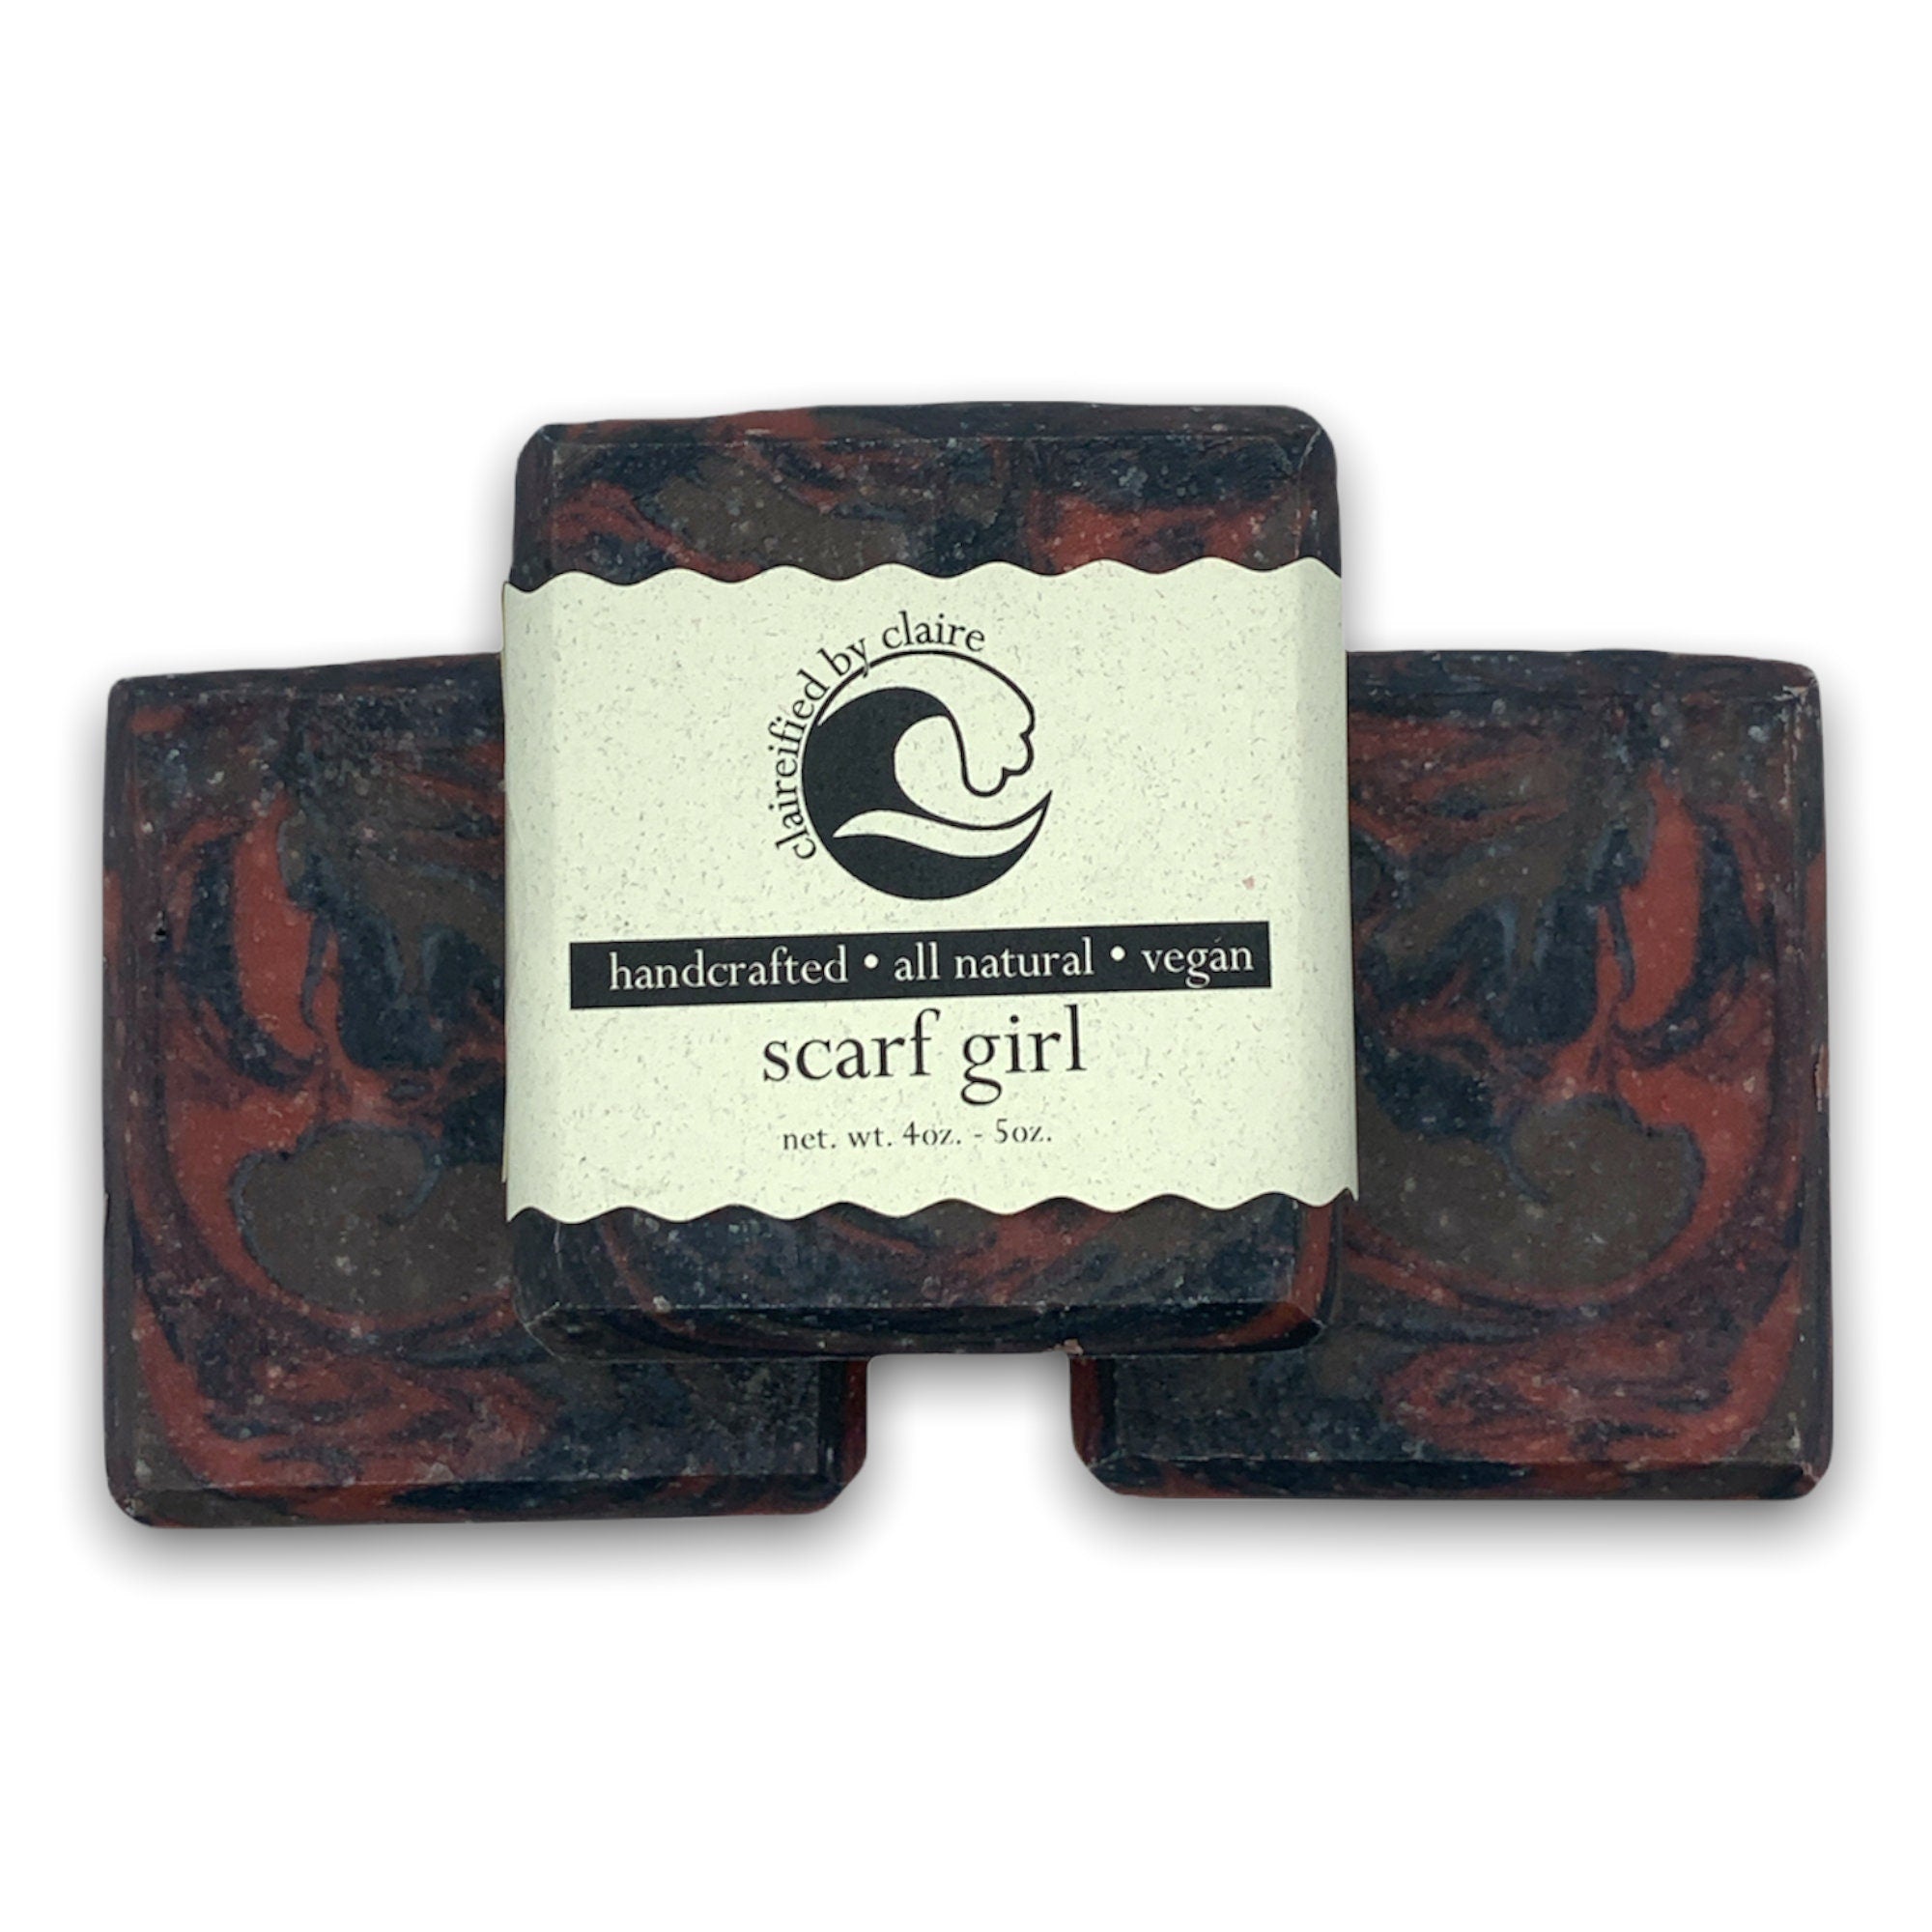 Scarf Girl: AOT Inspired Soap